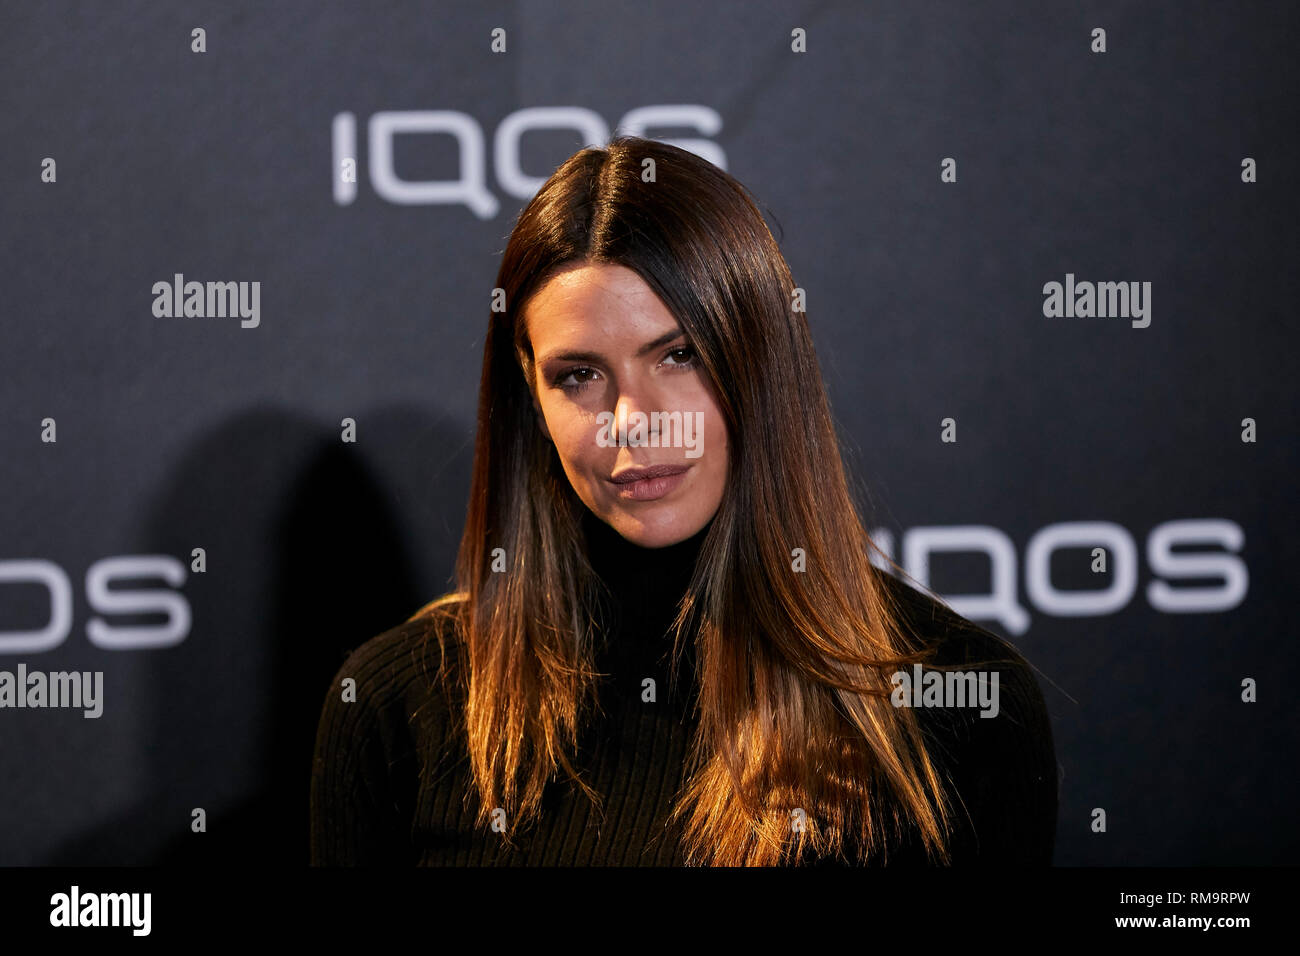 Laura Matamoros attends to IQOS3 presentation at Palacio de Cibeles in Madrid. Stock Photo